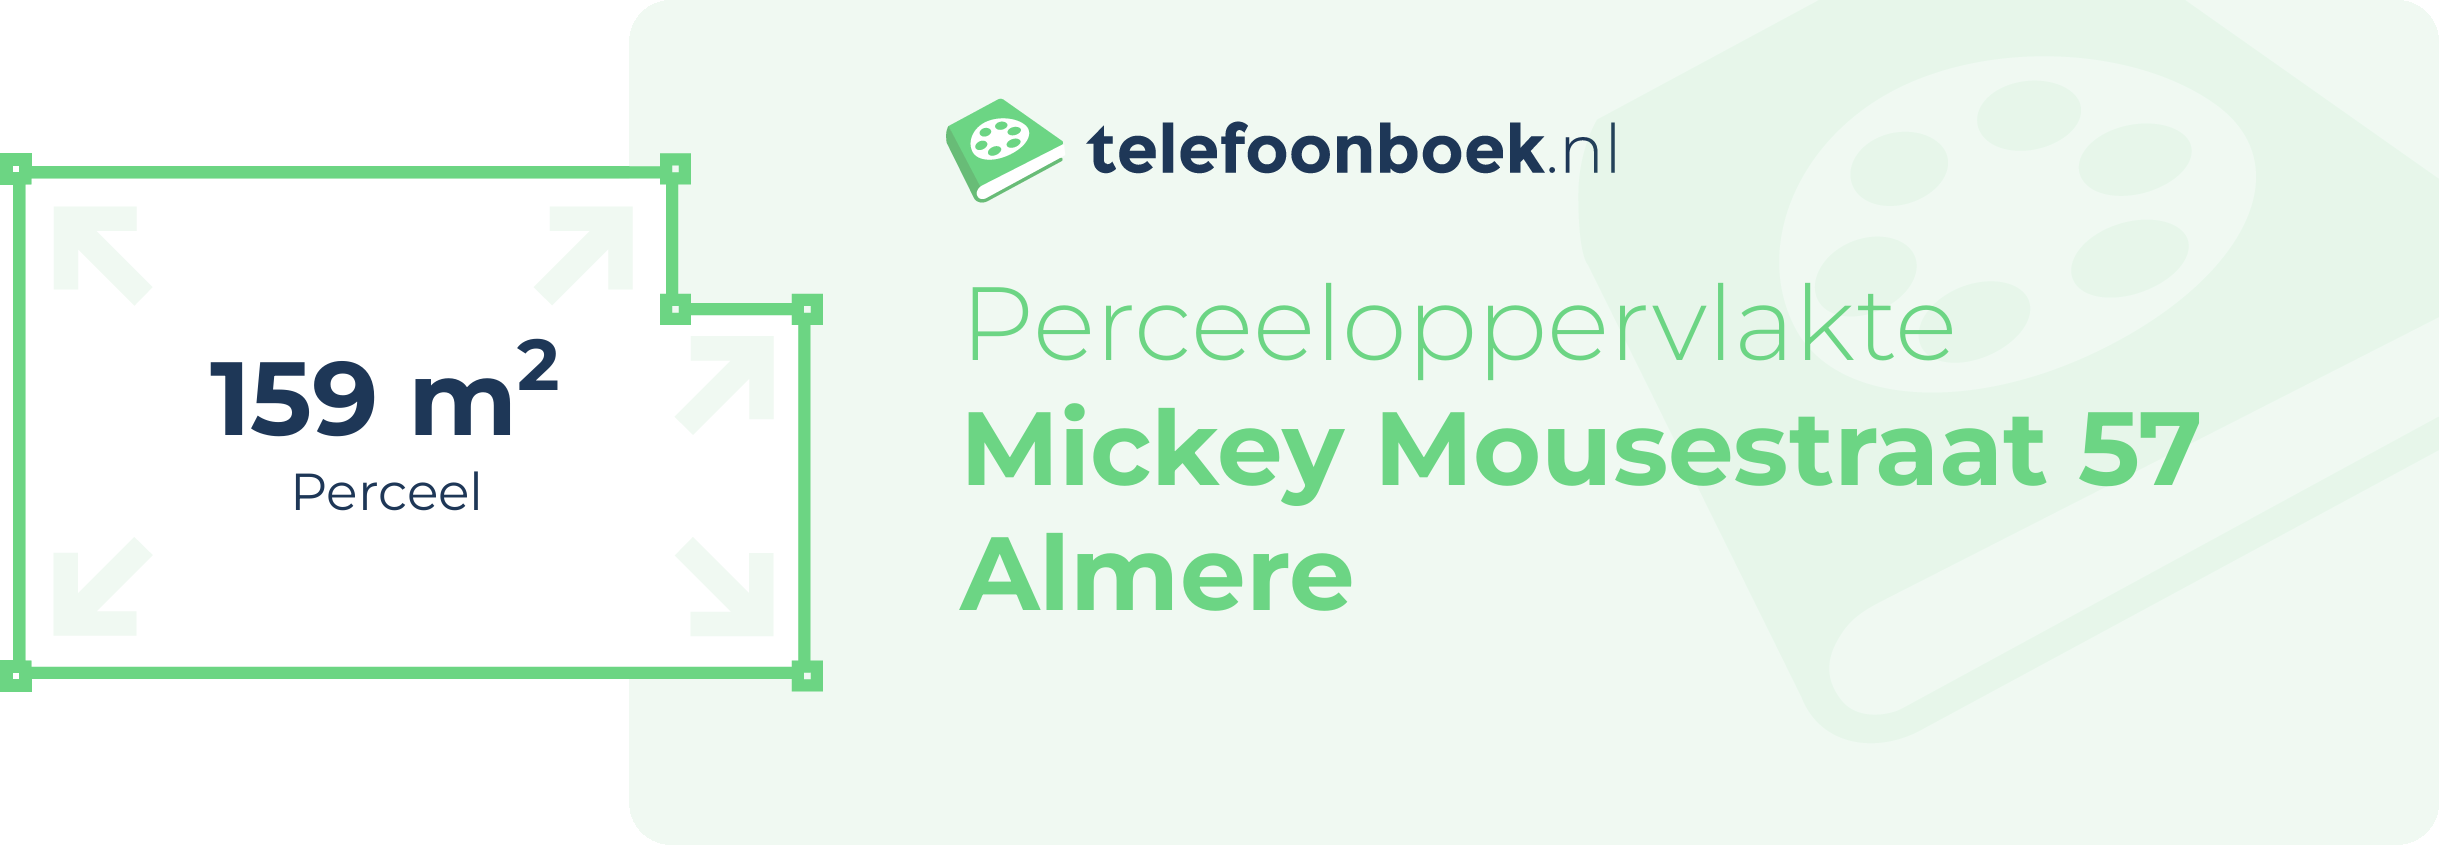 Perceeloppervlakte Mickey Mousestraat 57 Almere